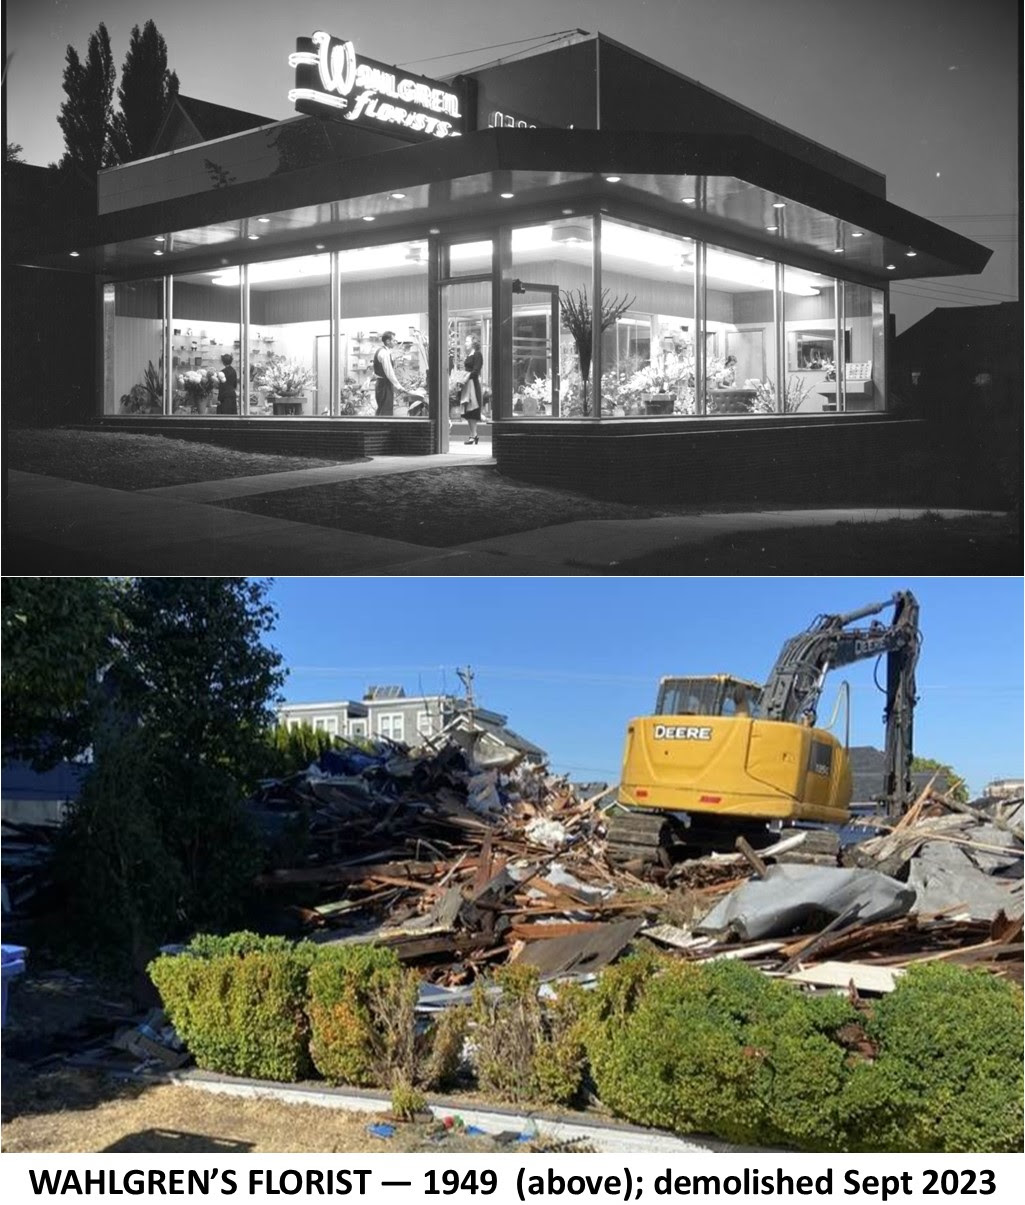 Wahlgren's Florist Shop, demolished